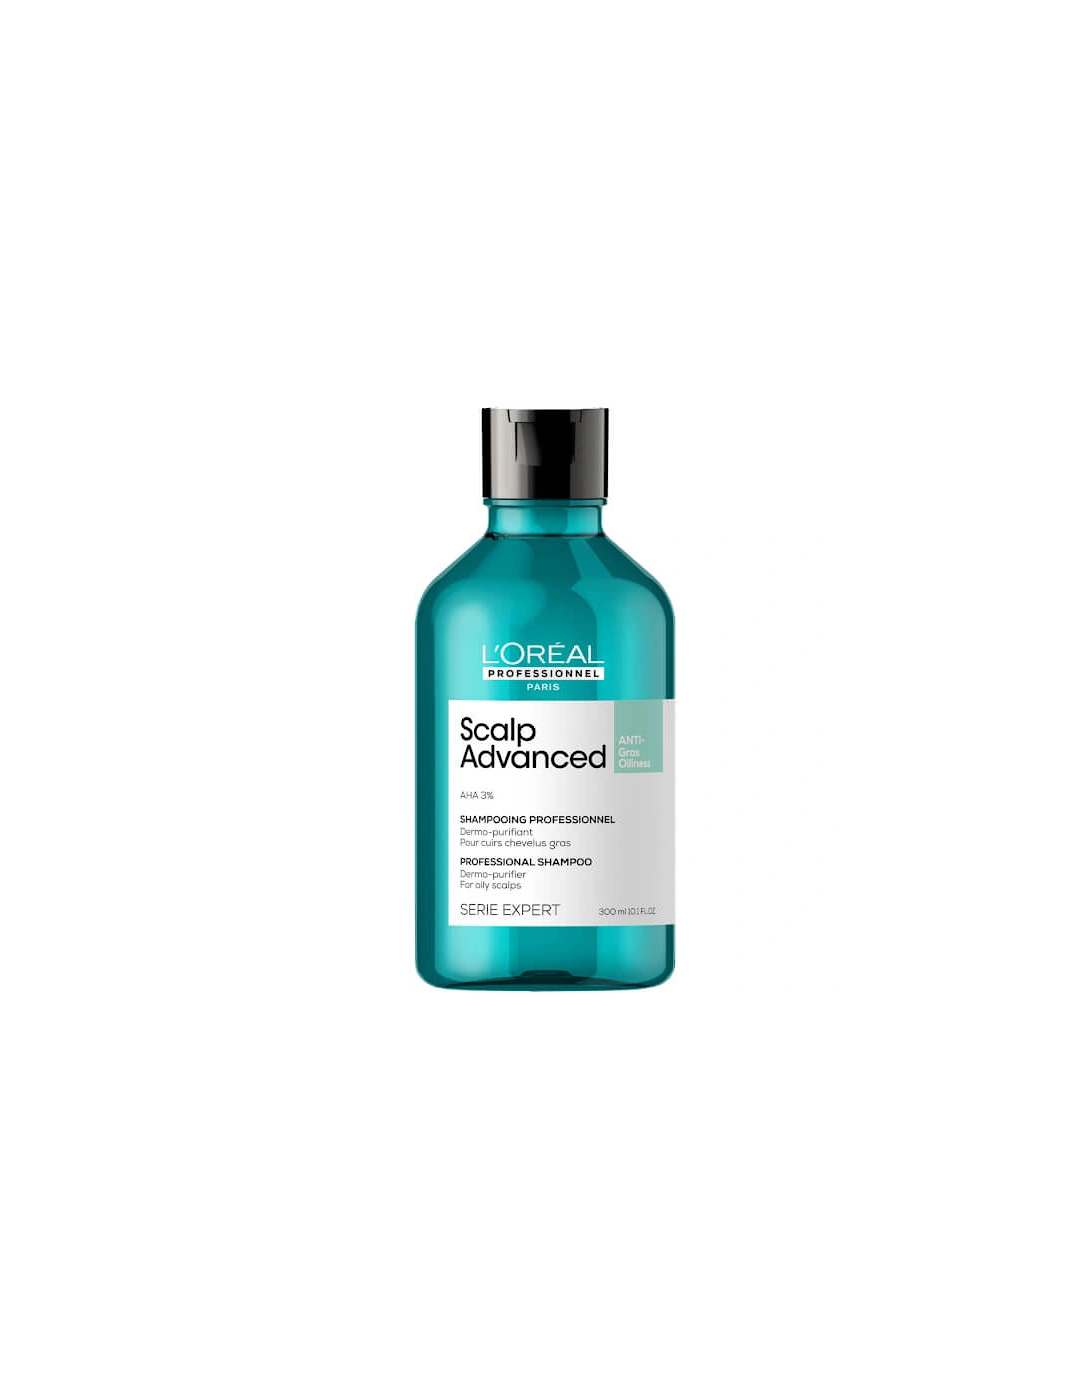 Professionnel Serié Expert Scalp Advanced Anti-Oiliness Dermo-Purifier Shampoo 300ml, 2 of 1